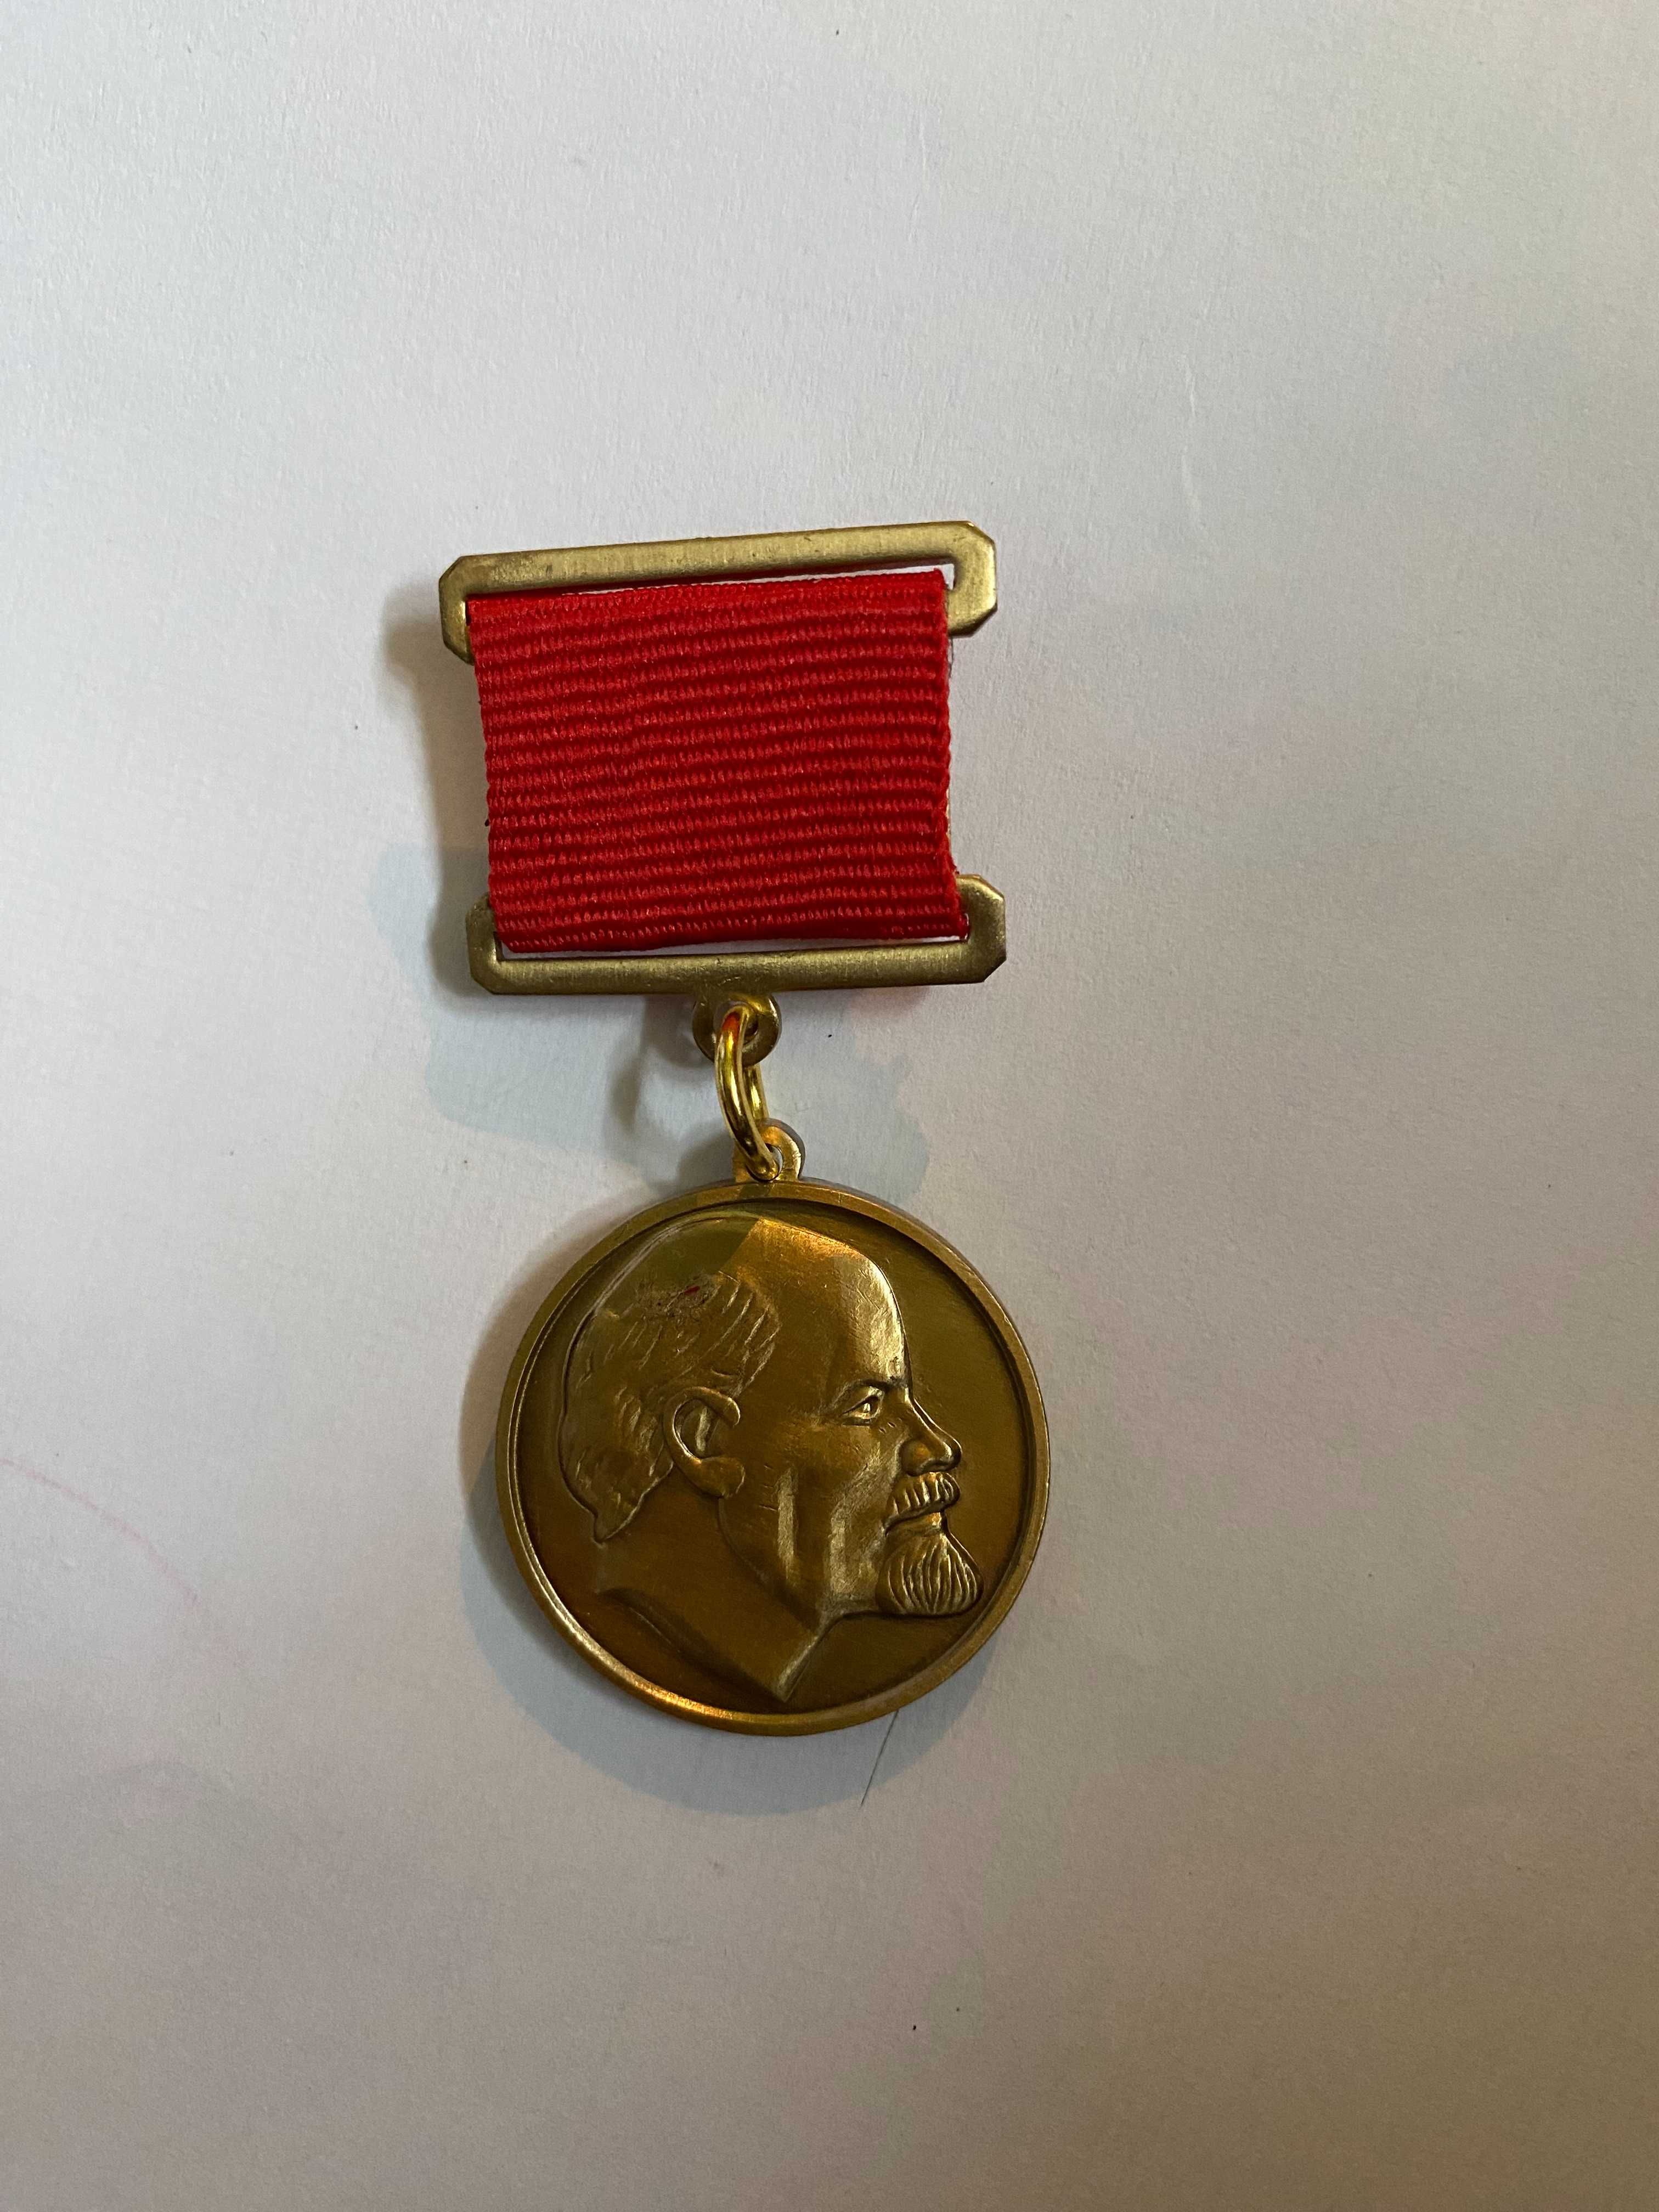 Radziecki medal "Laureat nagrody Lenina" ZSRR